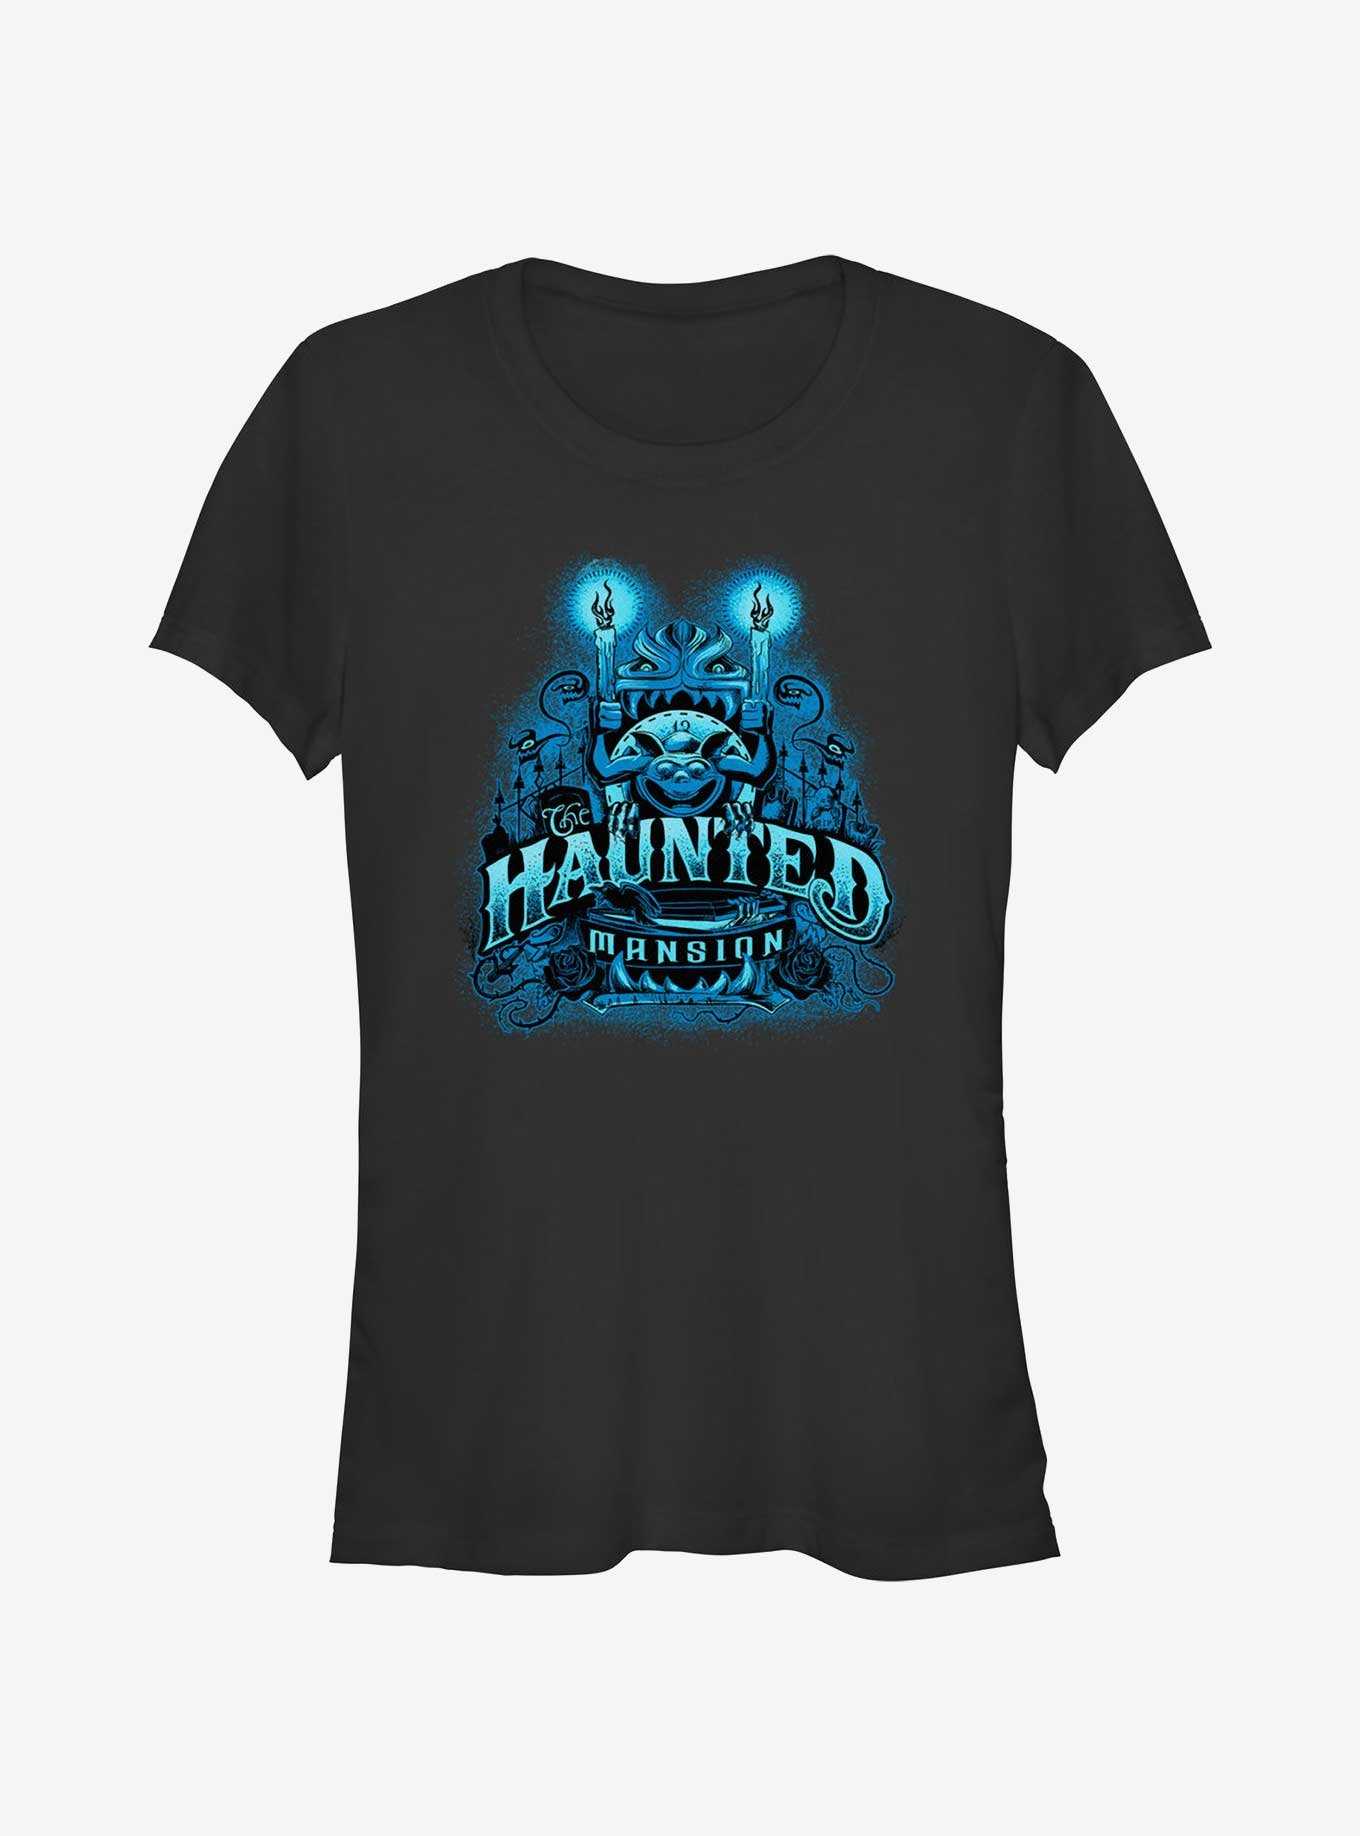 Disney Haunted Mansion Haunted Gargoyle Candles Girls T-Shirt, , hi-res